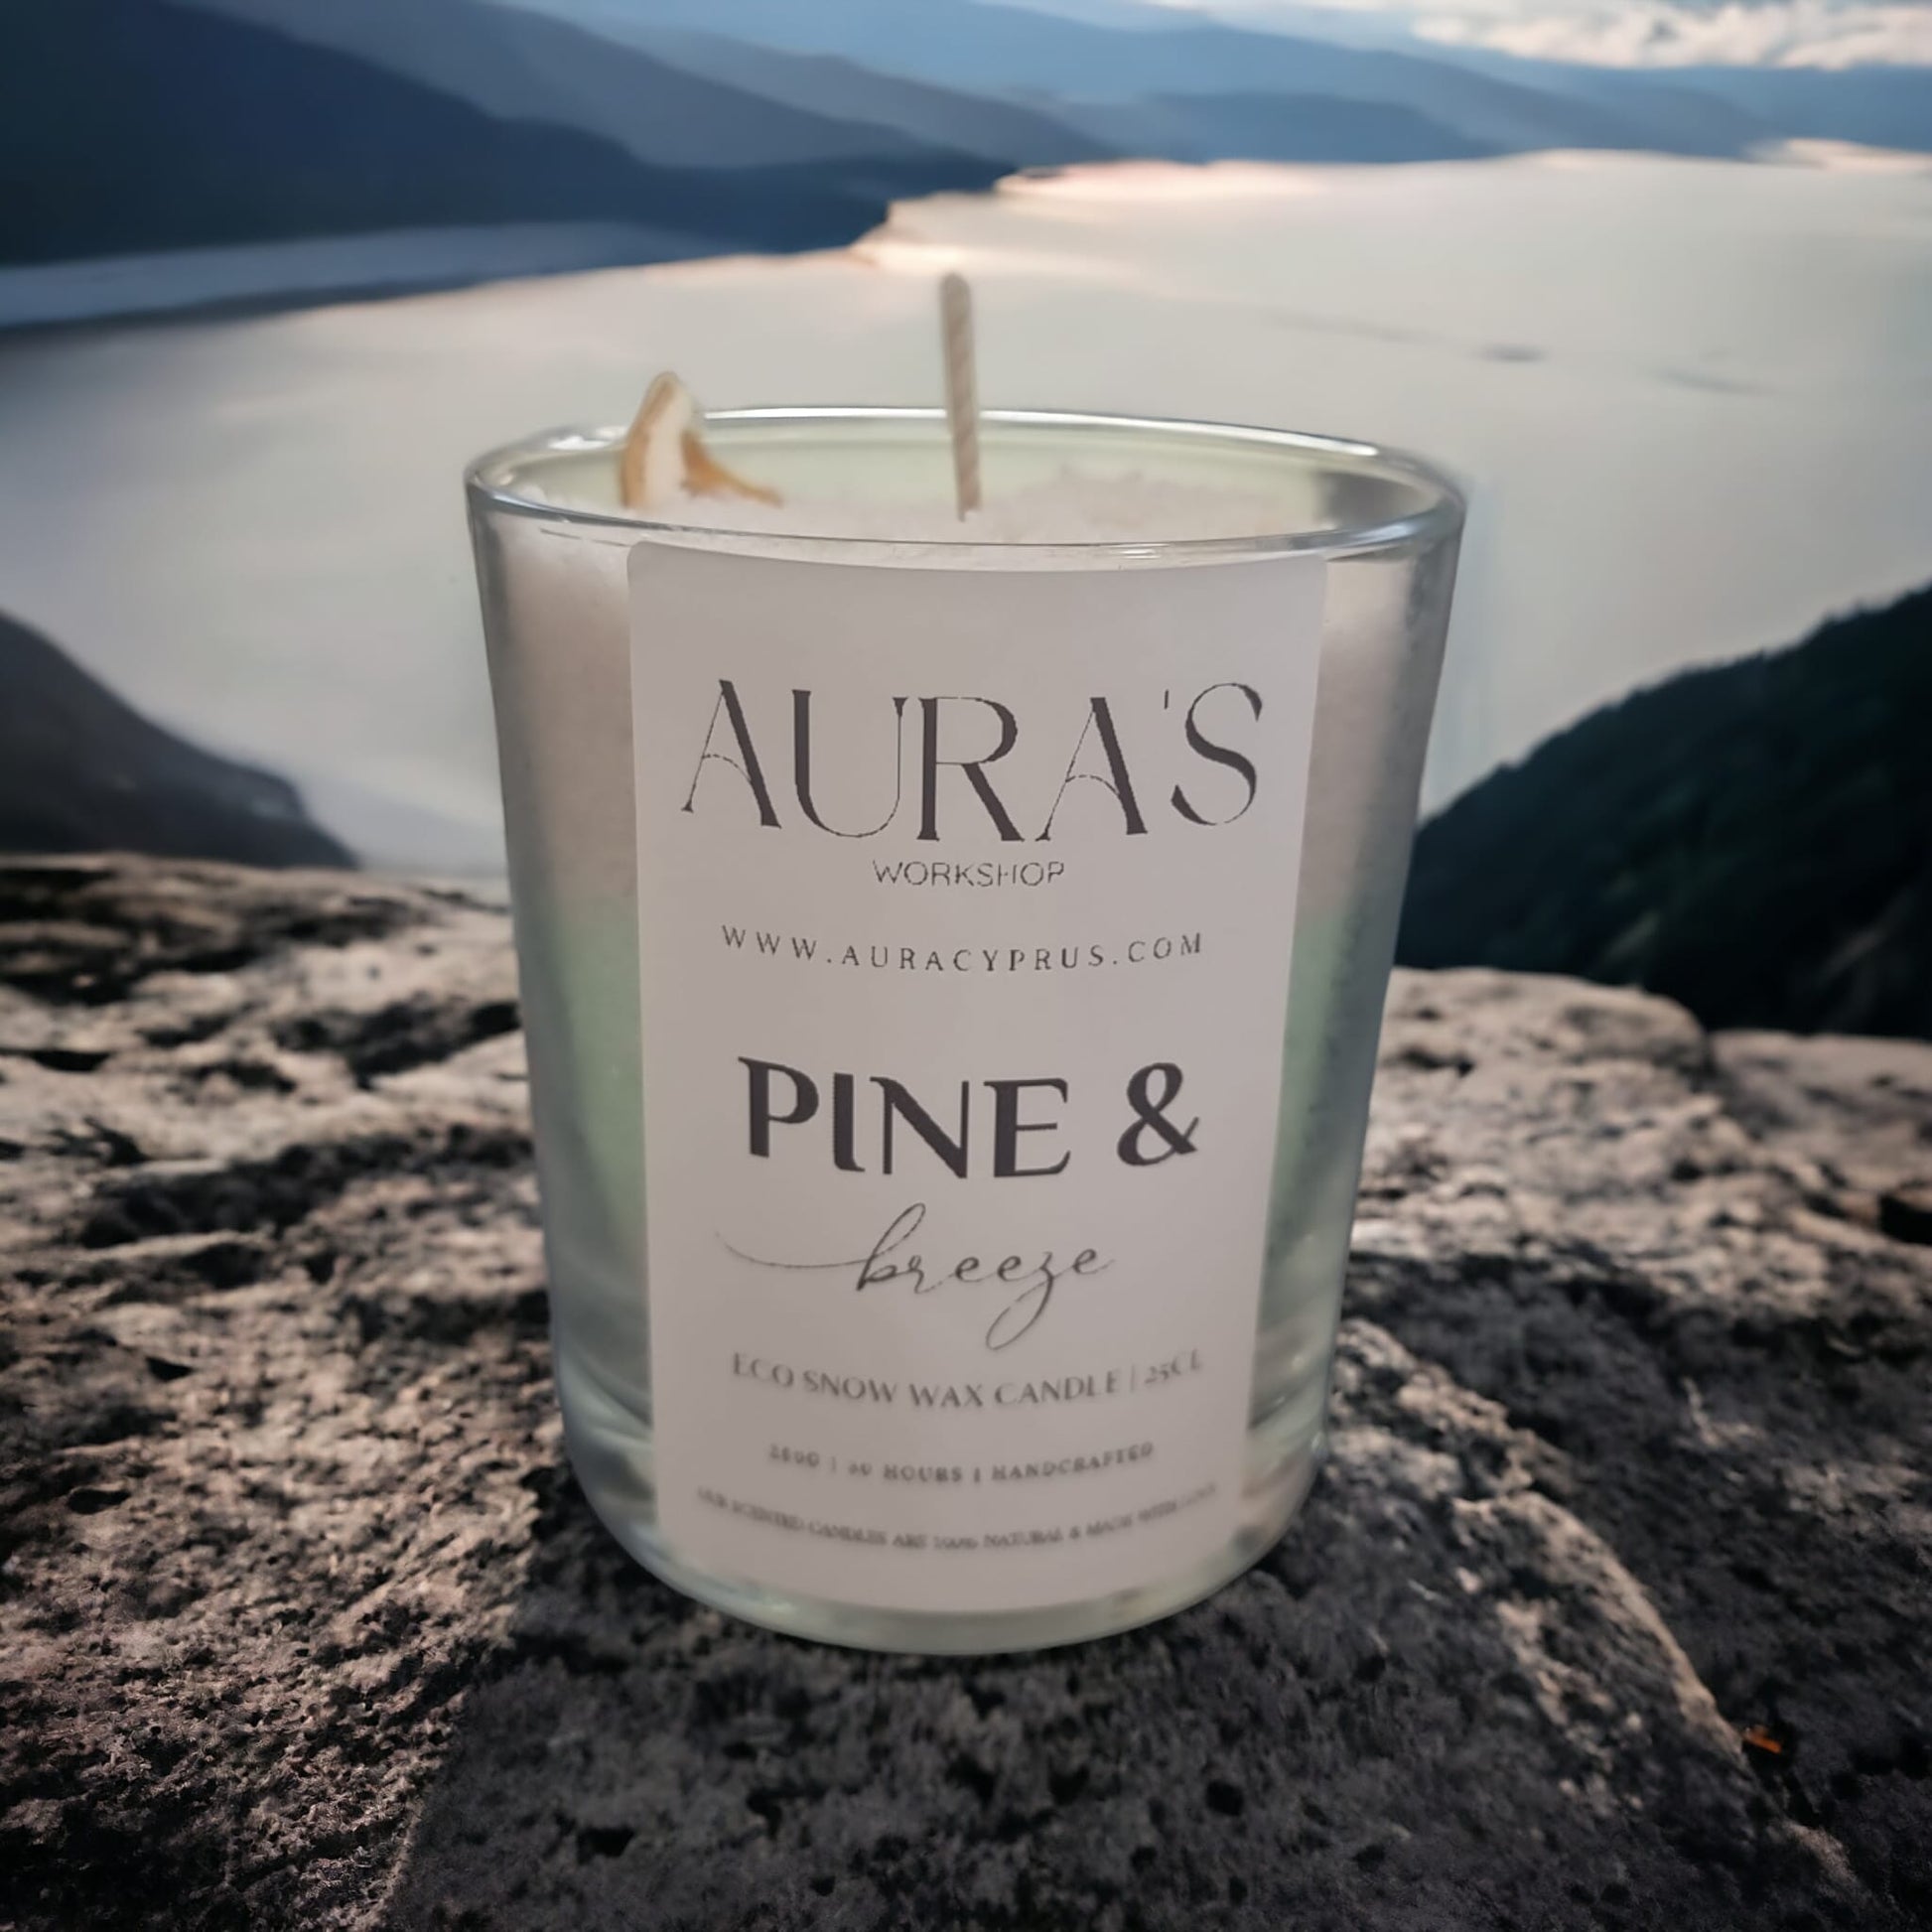 Pine & Breeze Scent - Eco Snow Wax Candle - Auras Workshop  -  Candles -   - Cyprus & Greece - Wholesale - Retail #